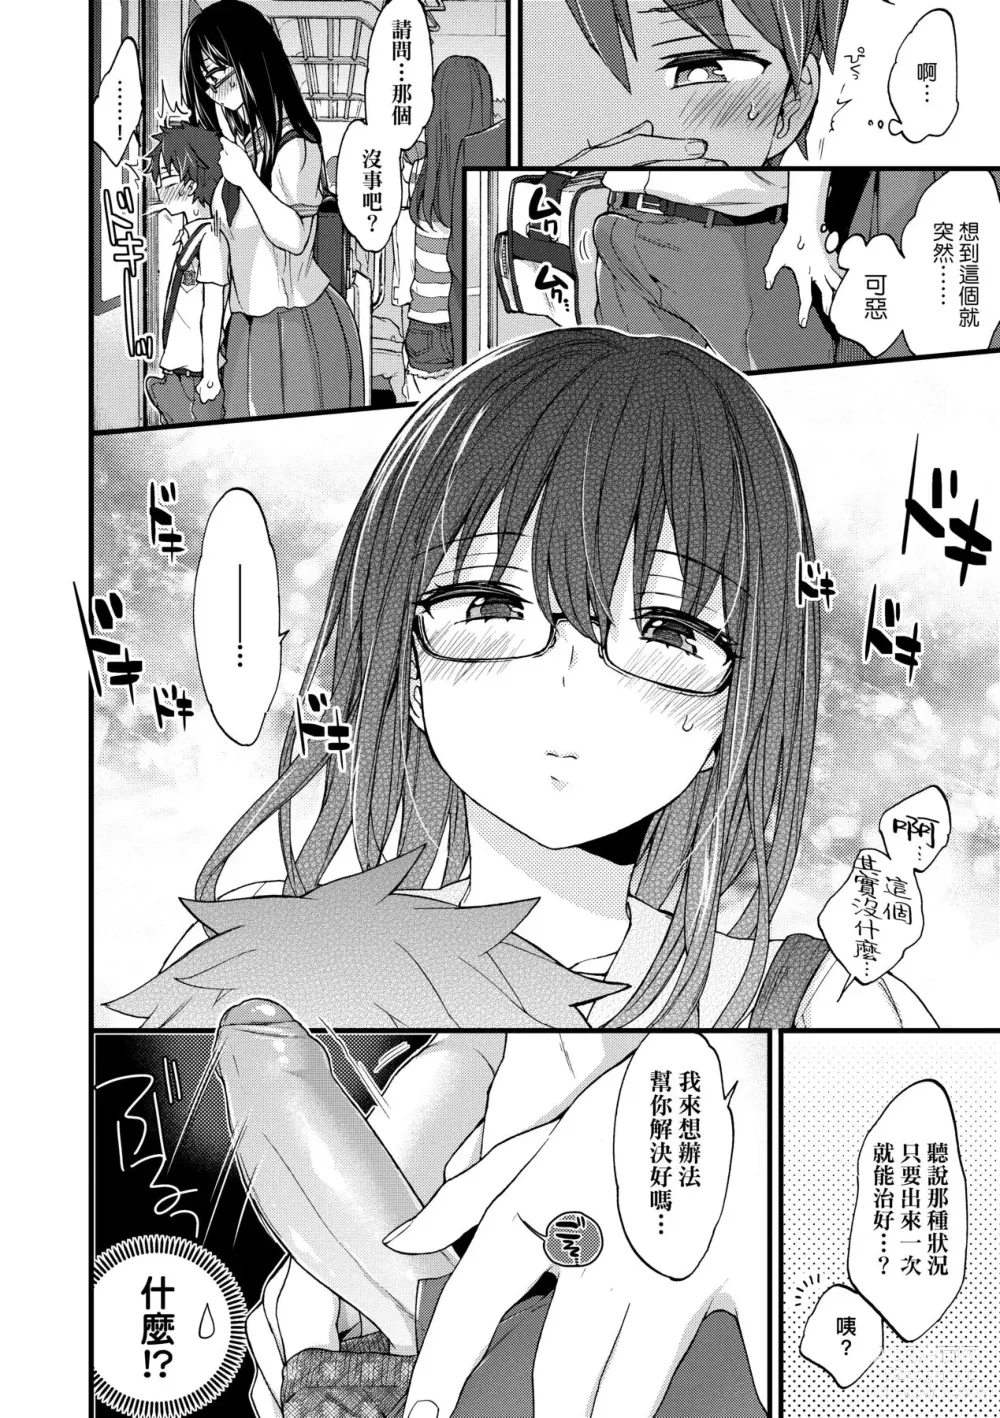 Page 161 of manga Onee-chan Time (decensored)